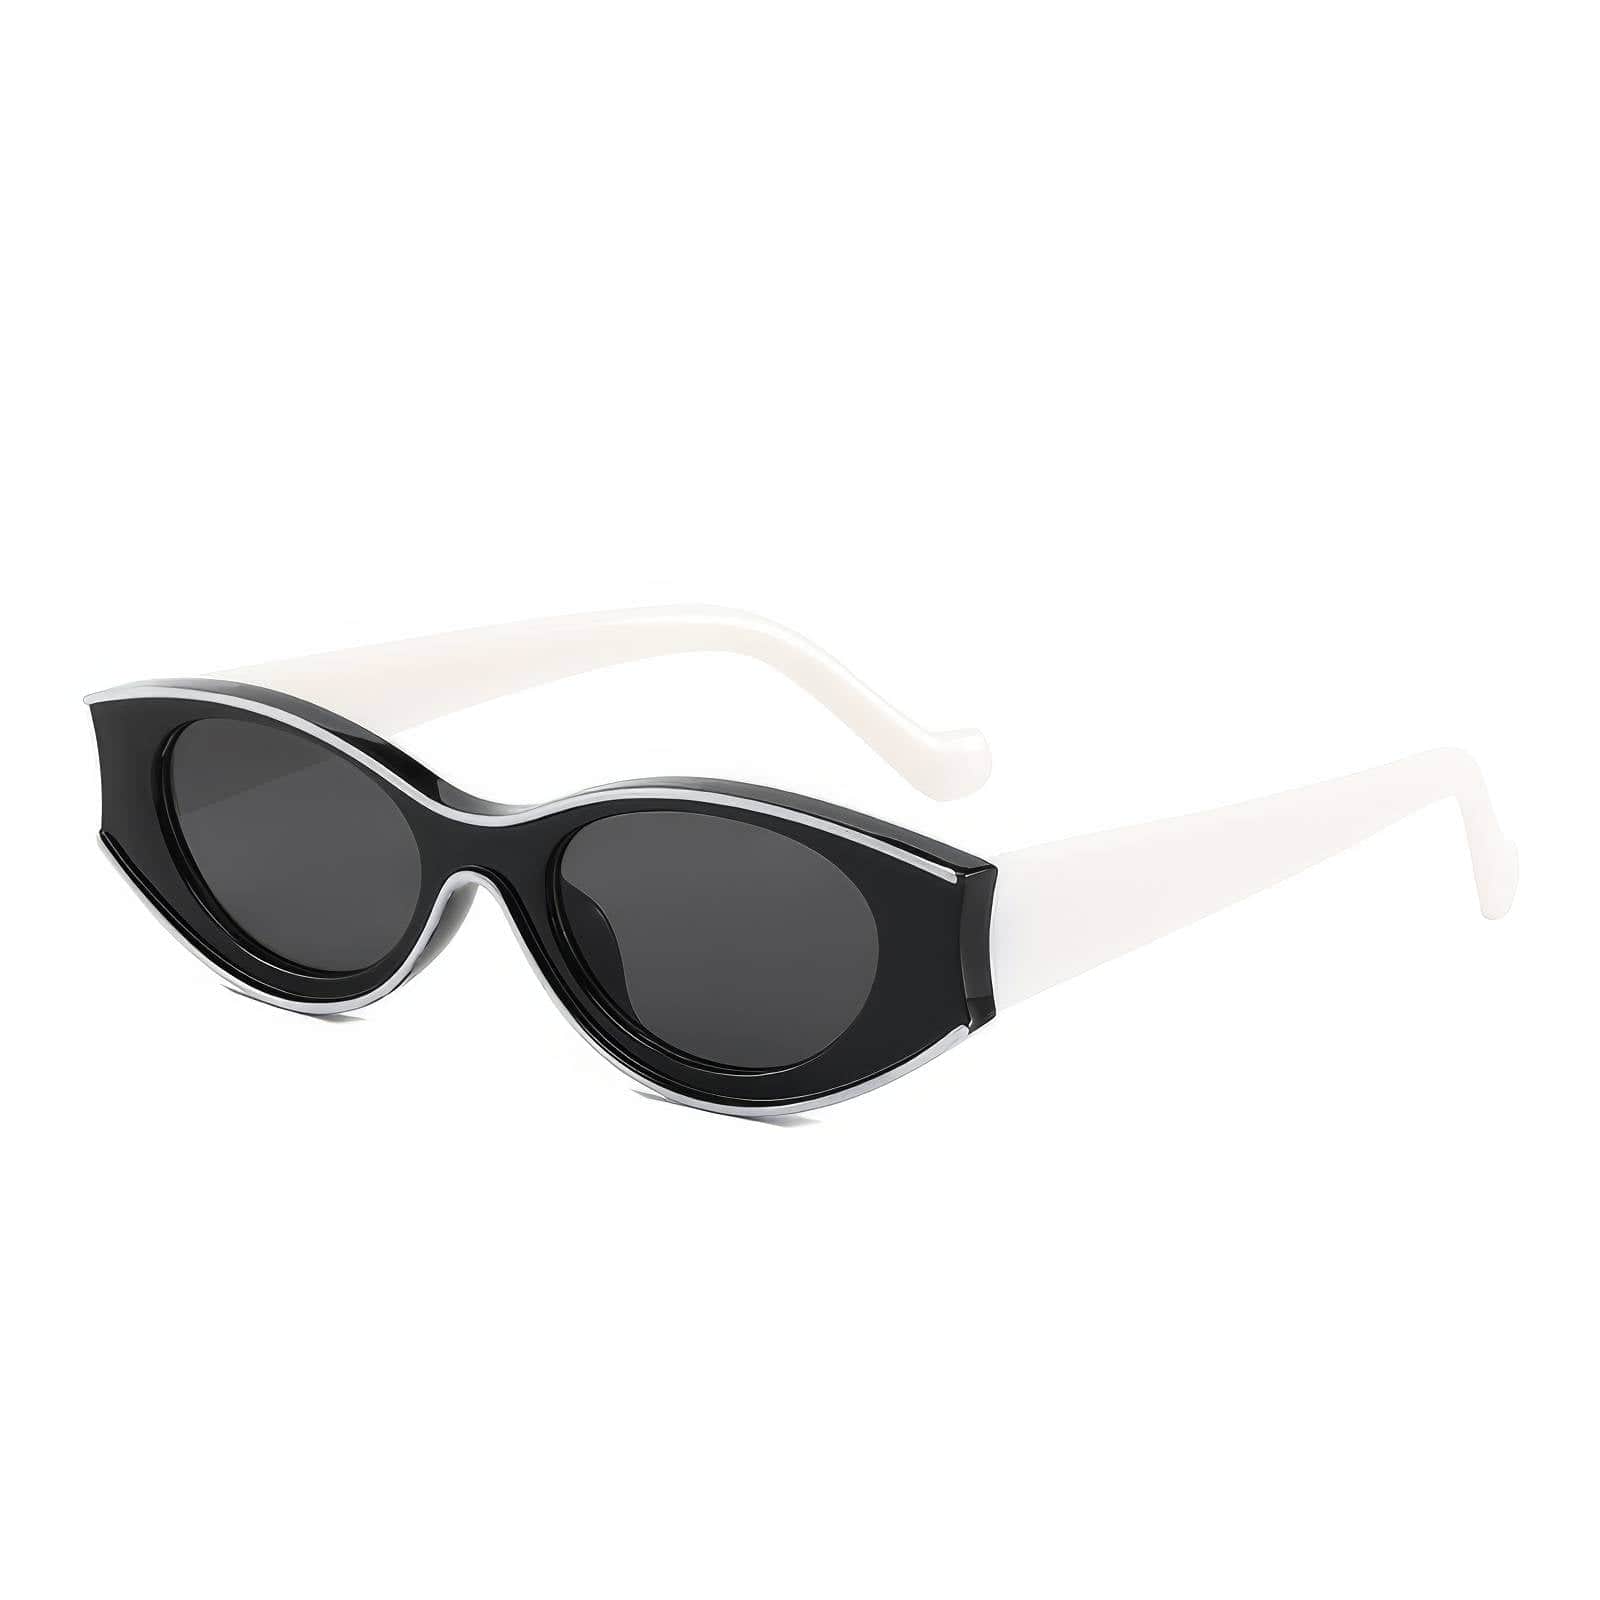 Designer Oval Eyewear Collection Black Gray/White / Resin